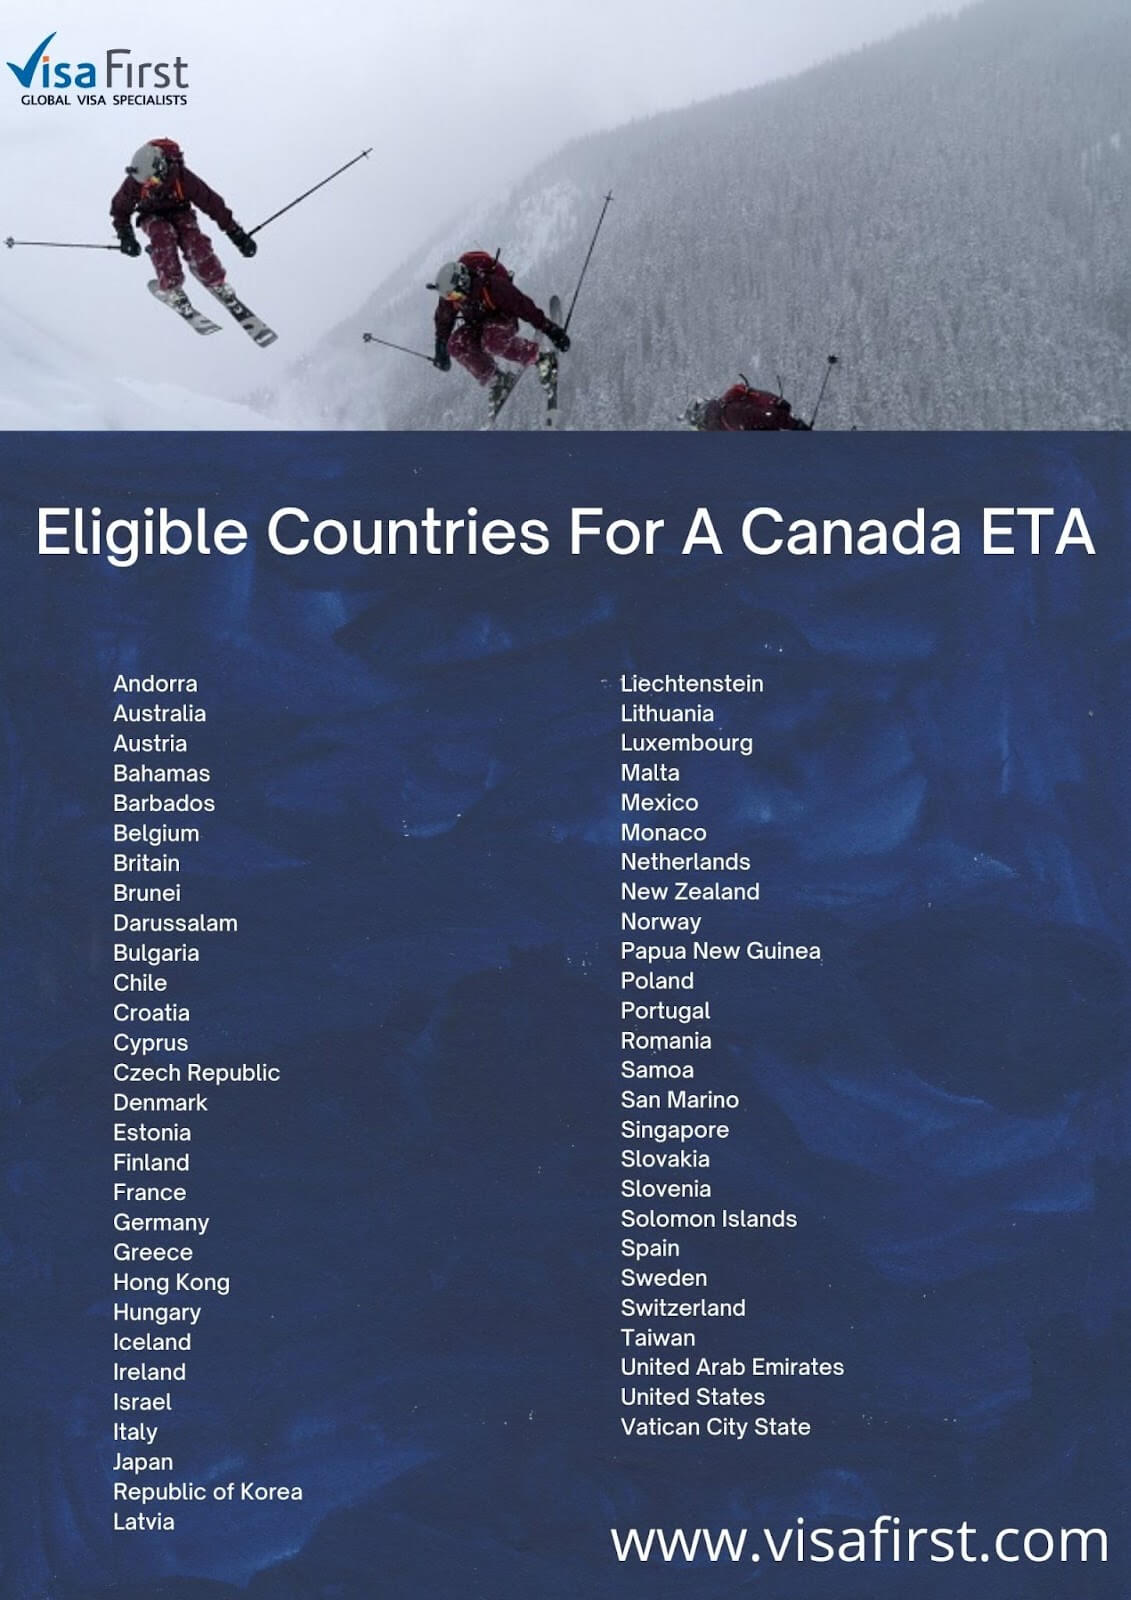 Canadian ETA visa eligible countries list - visafirst infographic